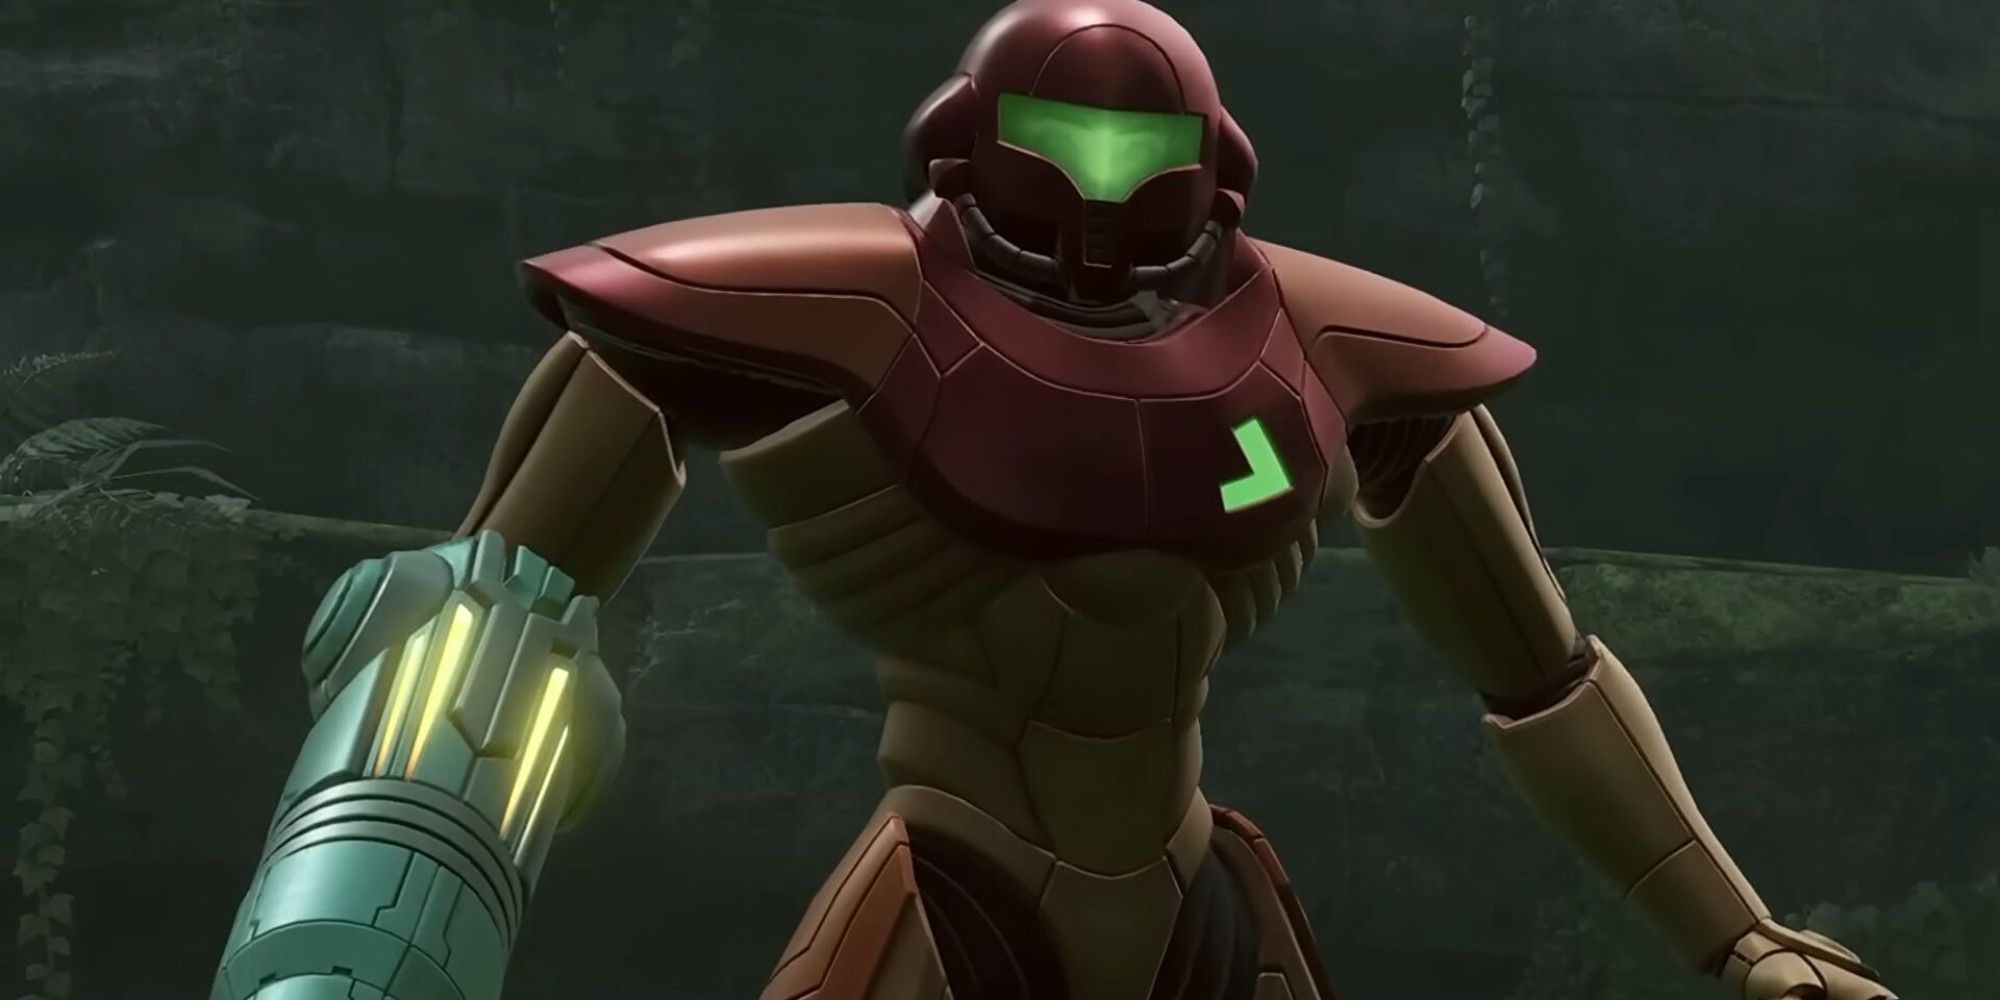 Samus Aran in her suit in Metroid Prime